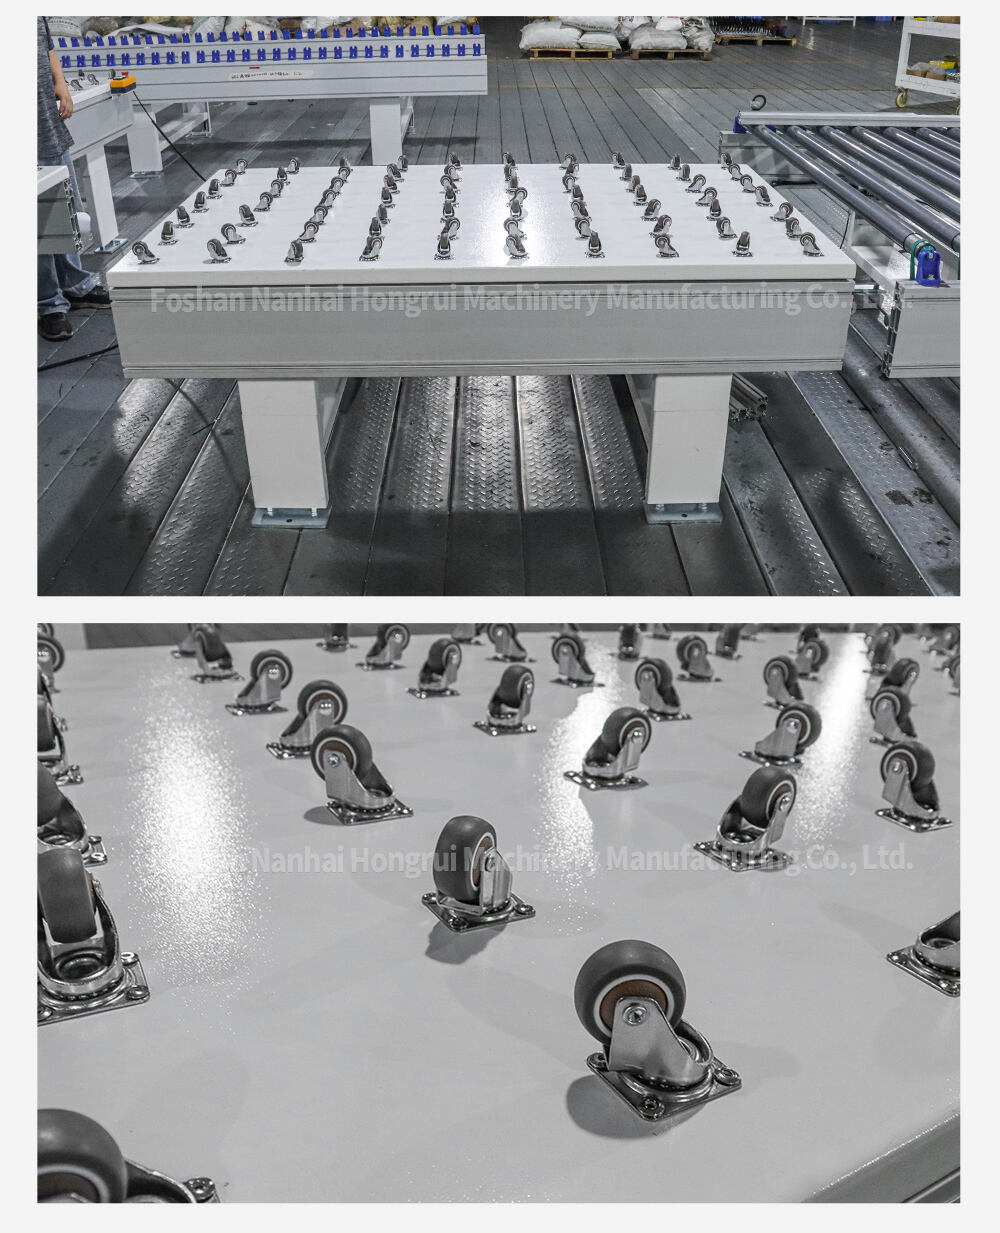 Hongrui Ball Transfer Conveyor Gear Lifting Universal Ball Platform Suitable for Plate Transportation details